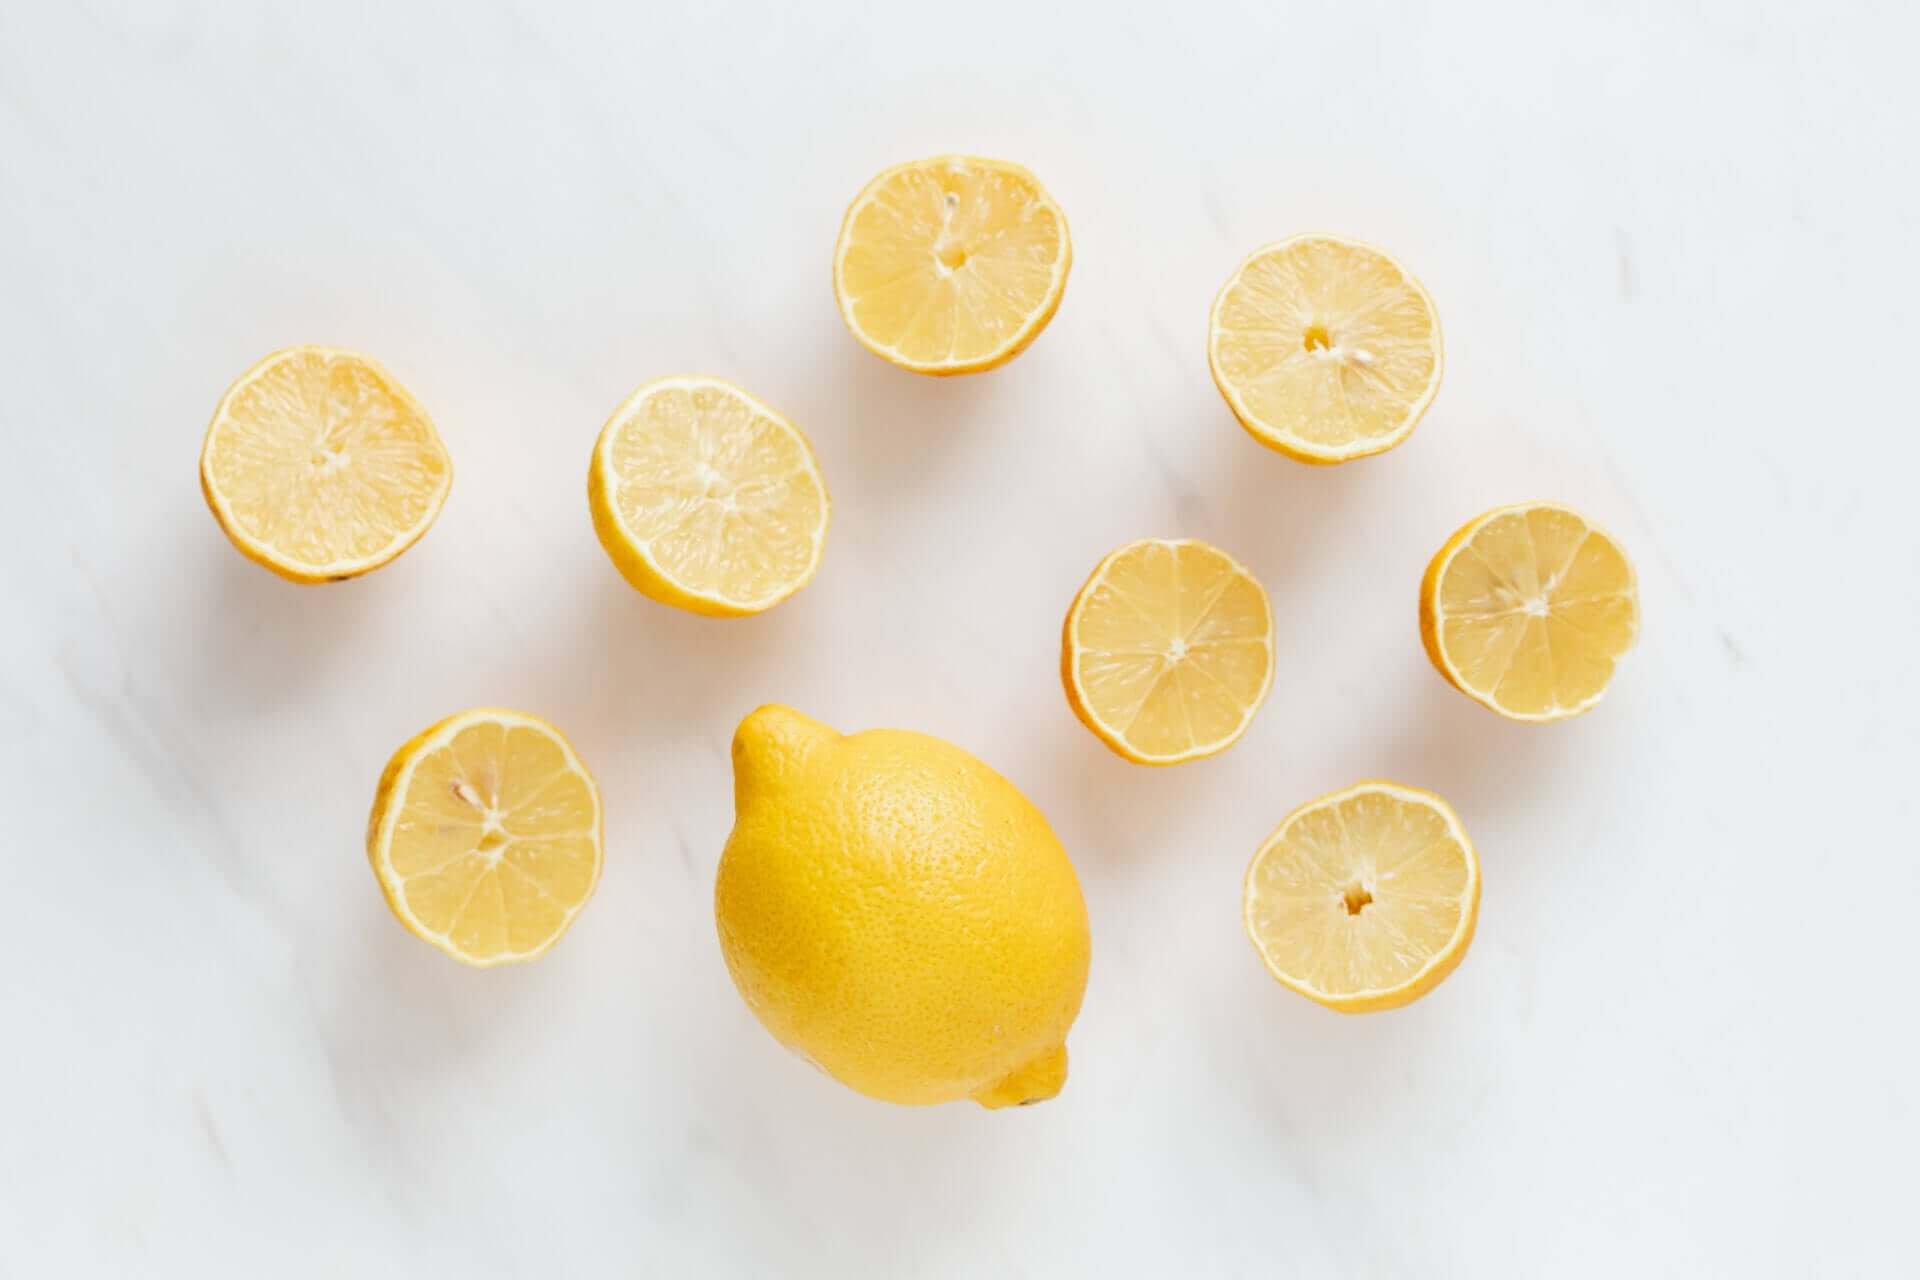 Several lemons cut in half.